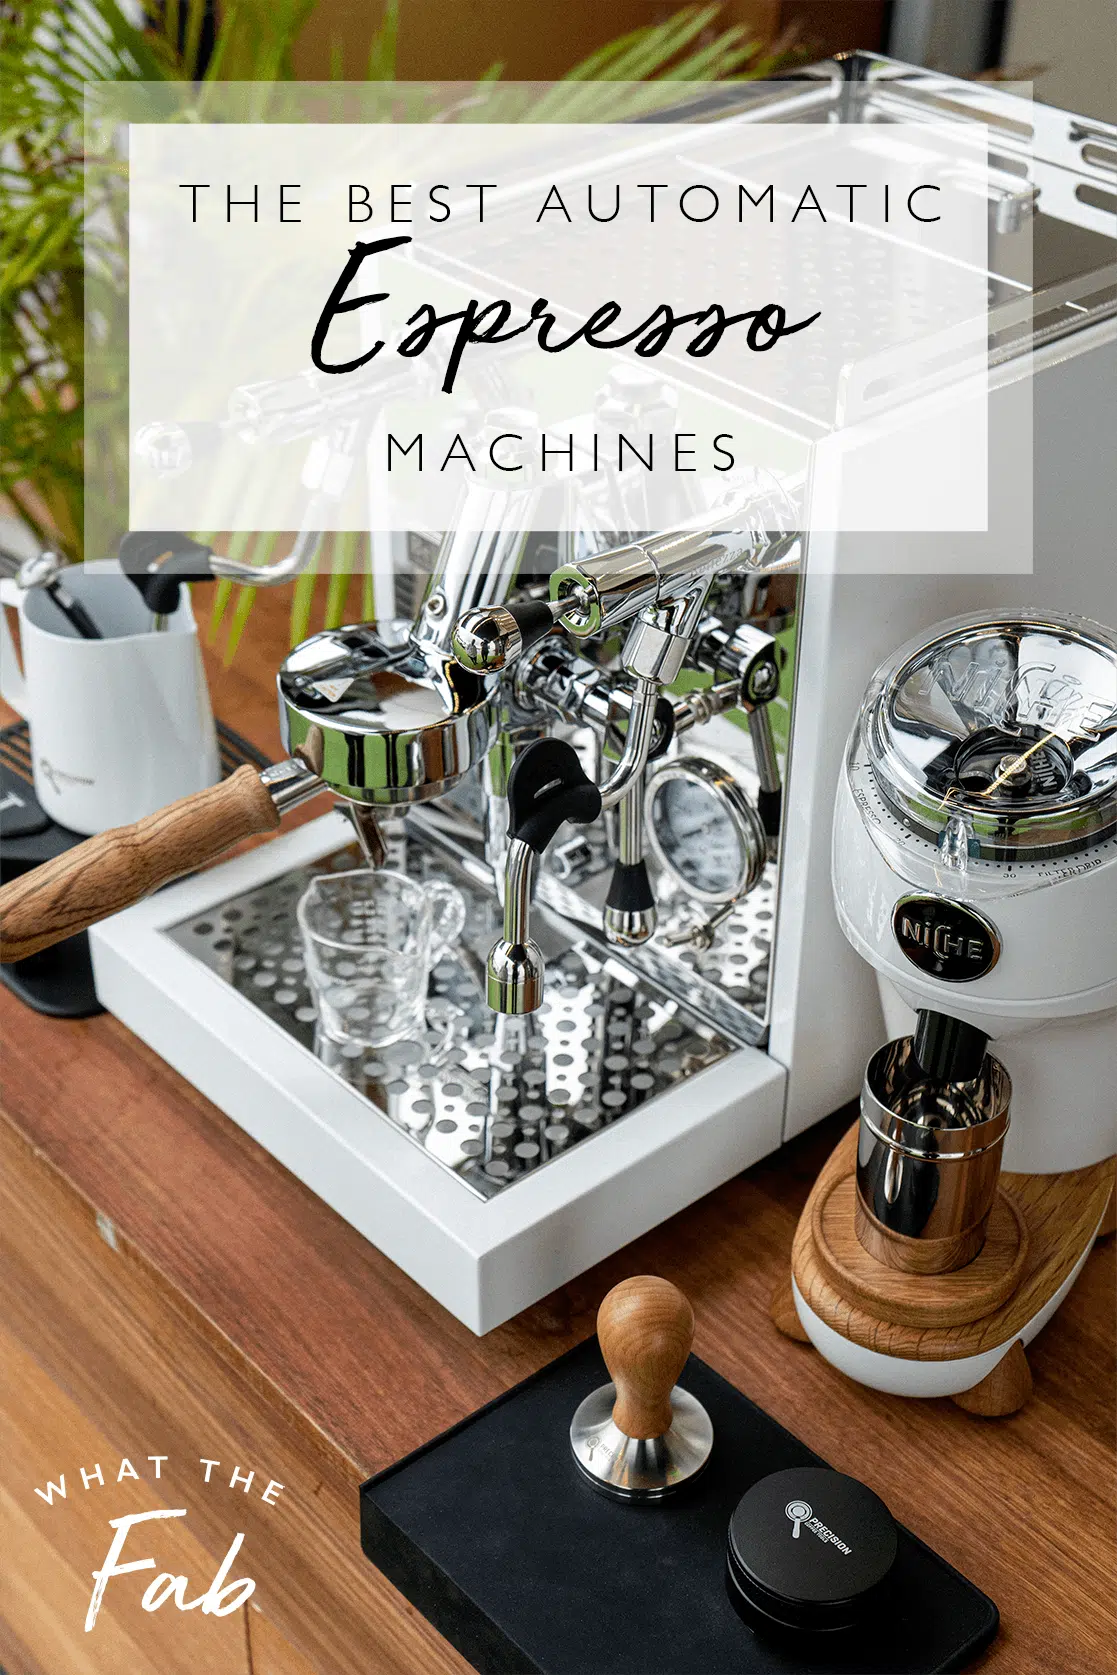 5 Best Espresso Machines With Automatic Milk Steamers